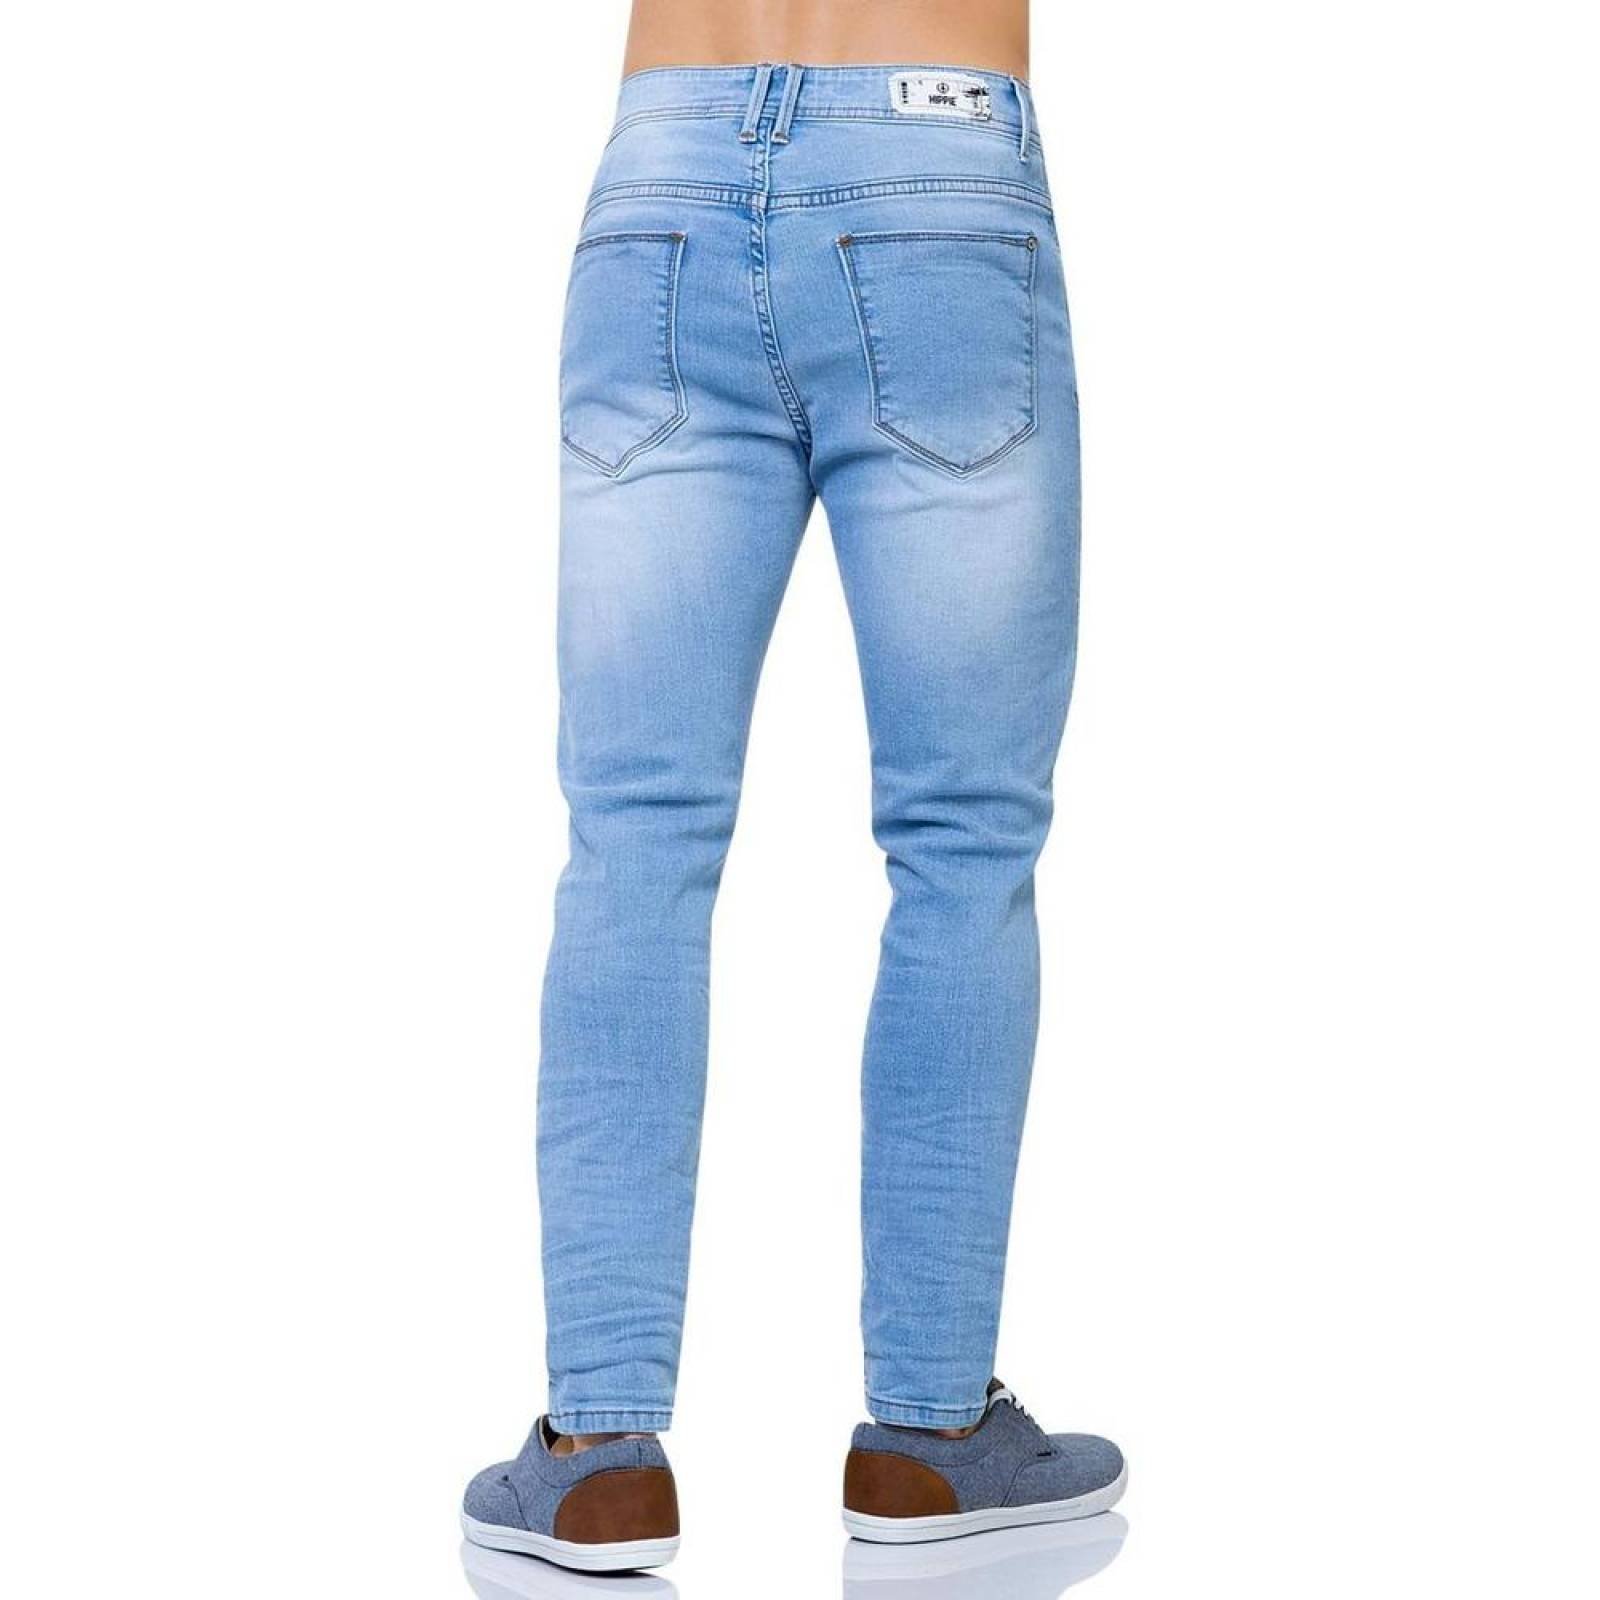 Jeans Hippie & Rock Hombre Azul Mezclilla Stretch St18Cb111 